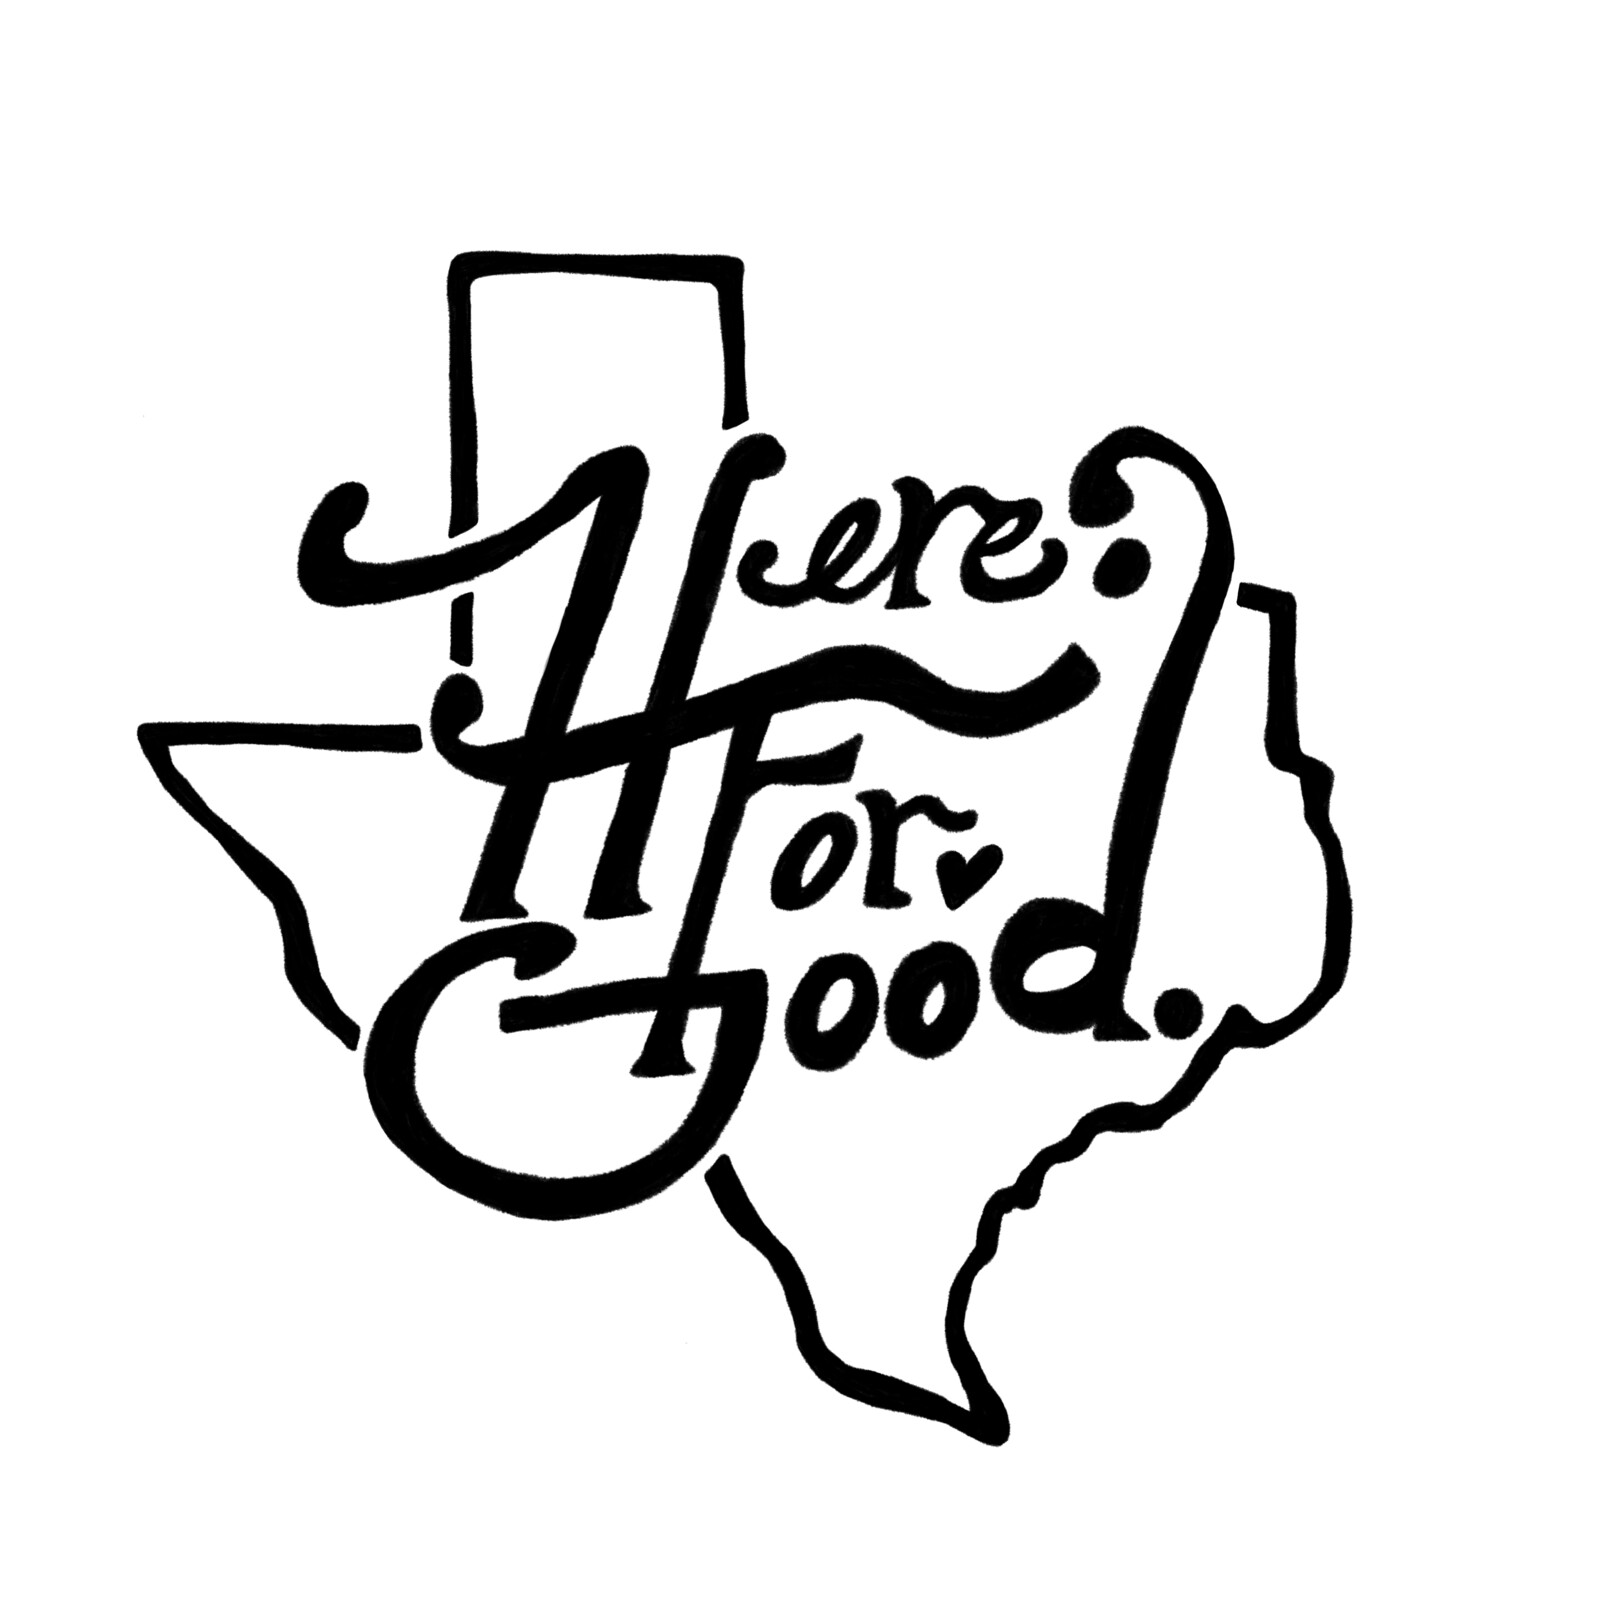 "Here for Good" Retreat T-Shirt Design (2019)